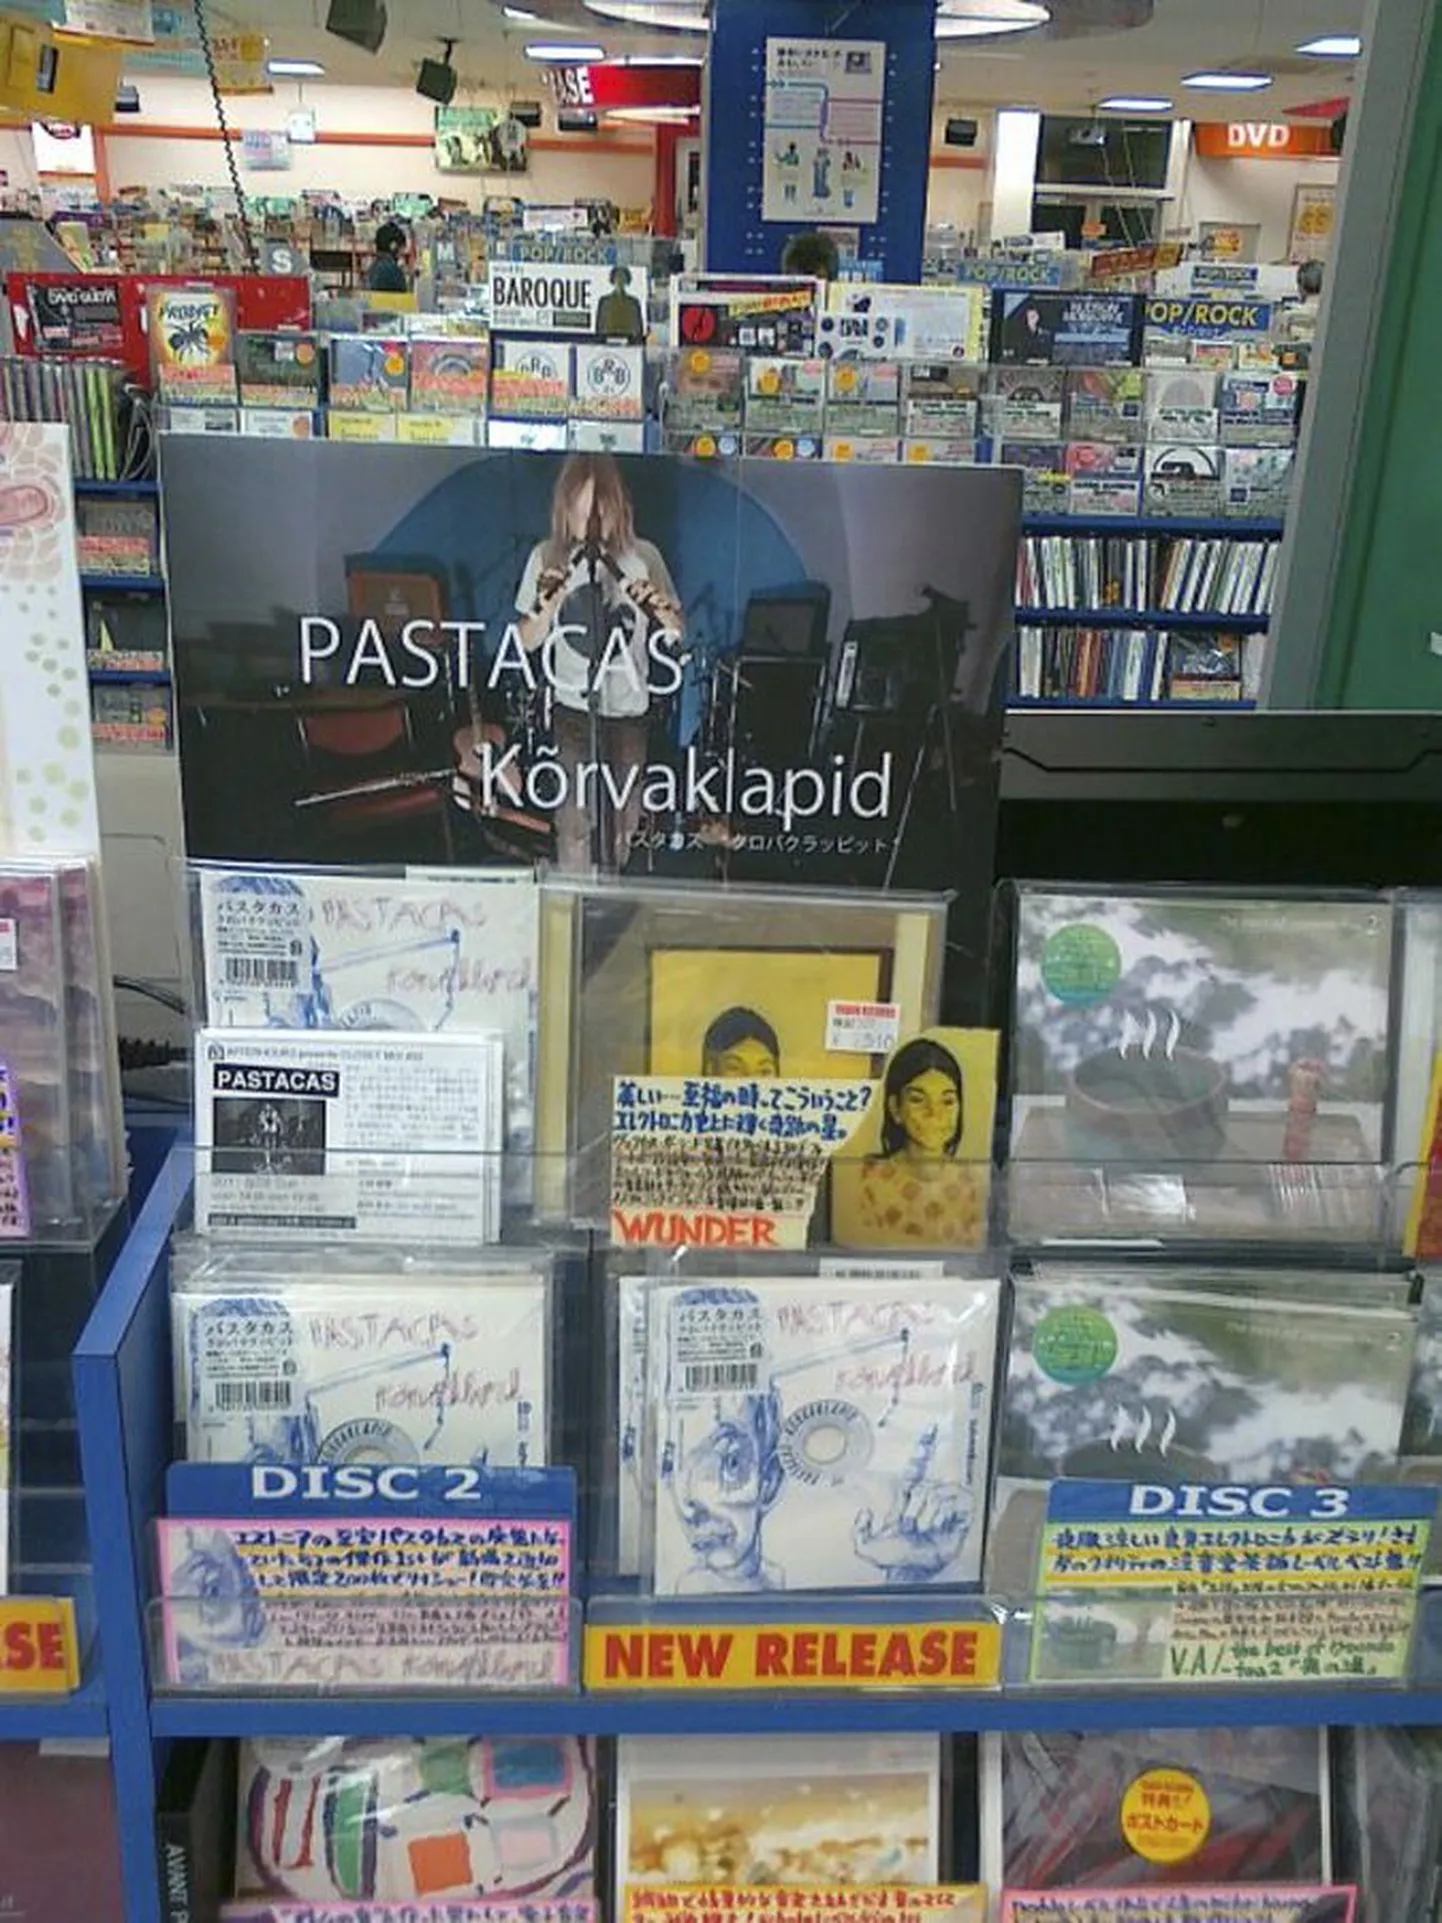 Pastacas avastas Tokyo suures Tower Recordsi plaadipoes oma riiuli.